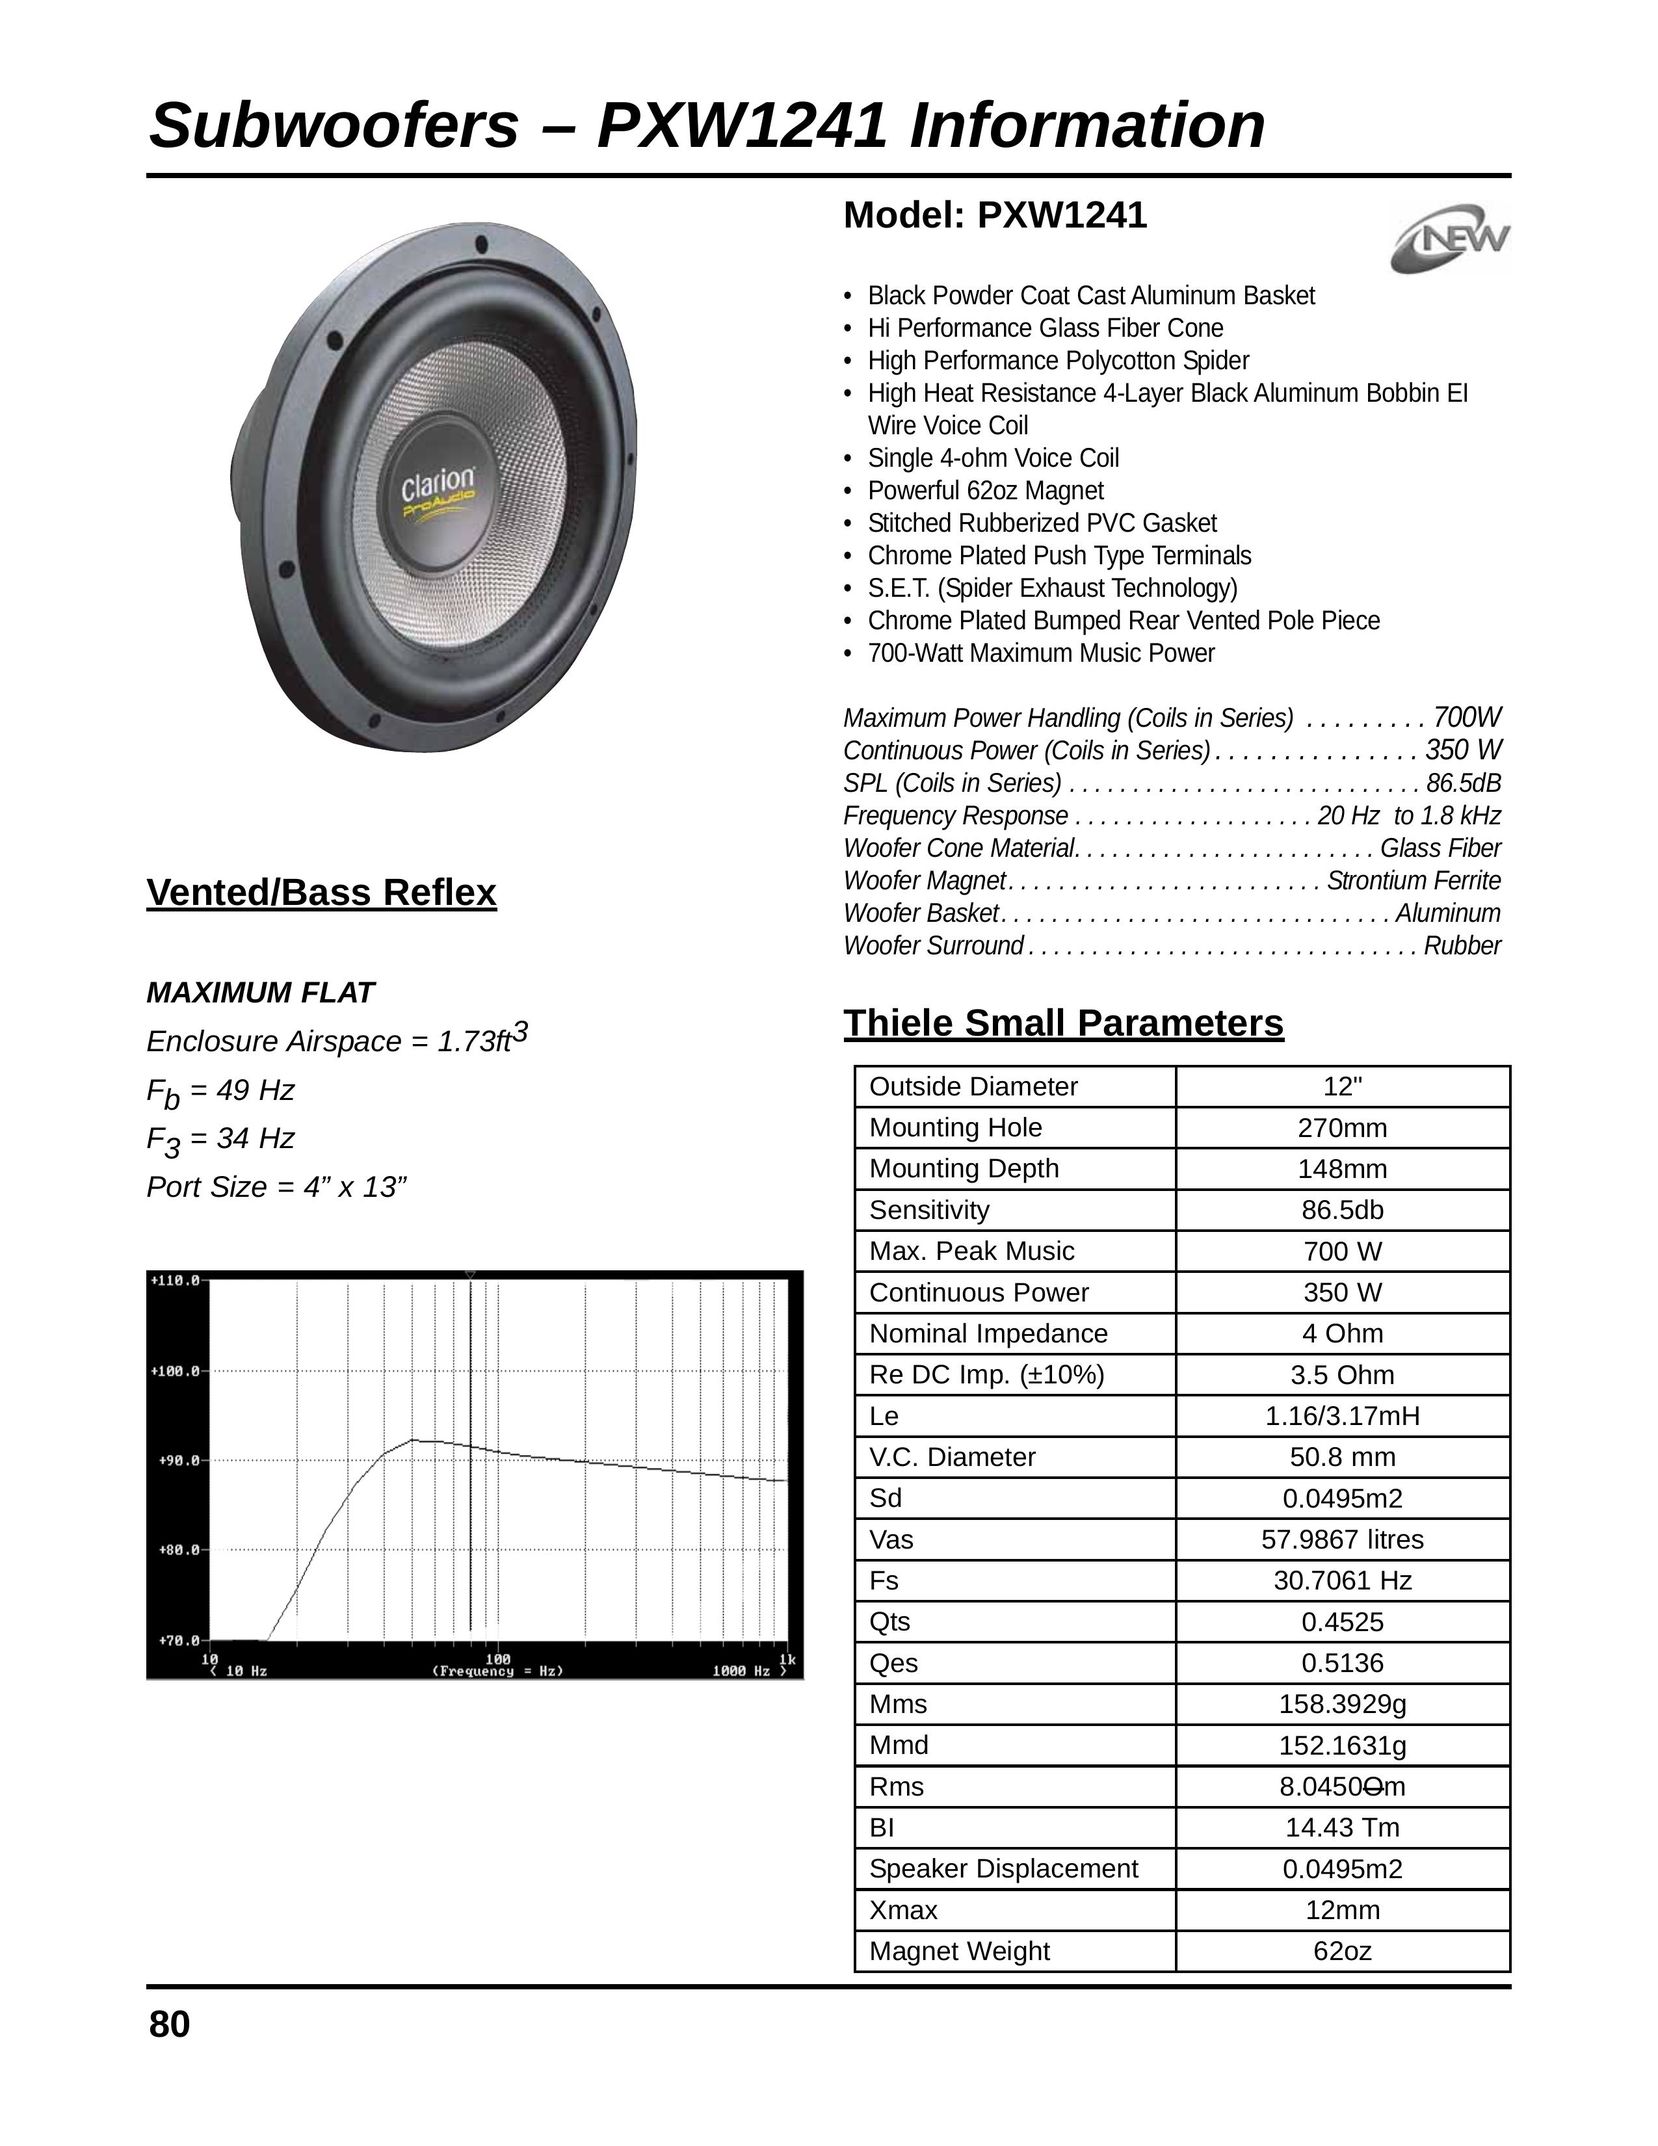 Clarion PXW1241 Speaker User Manual